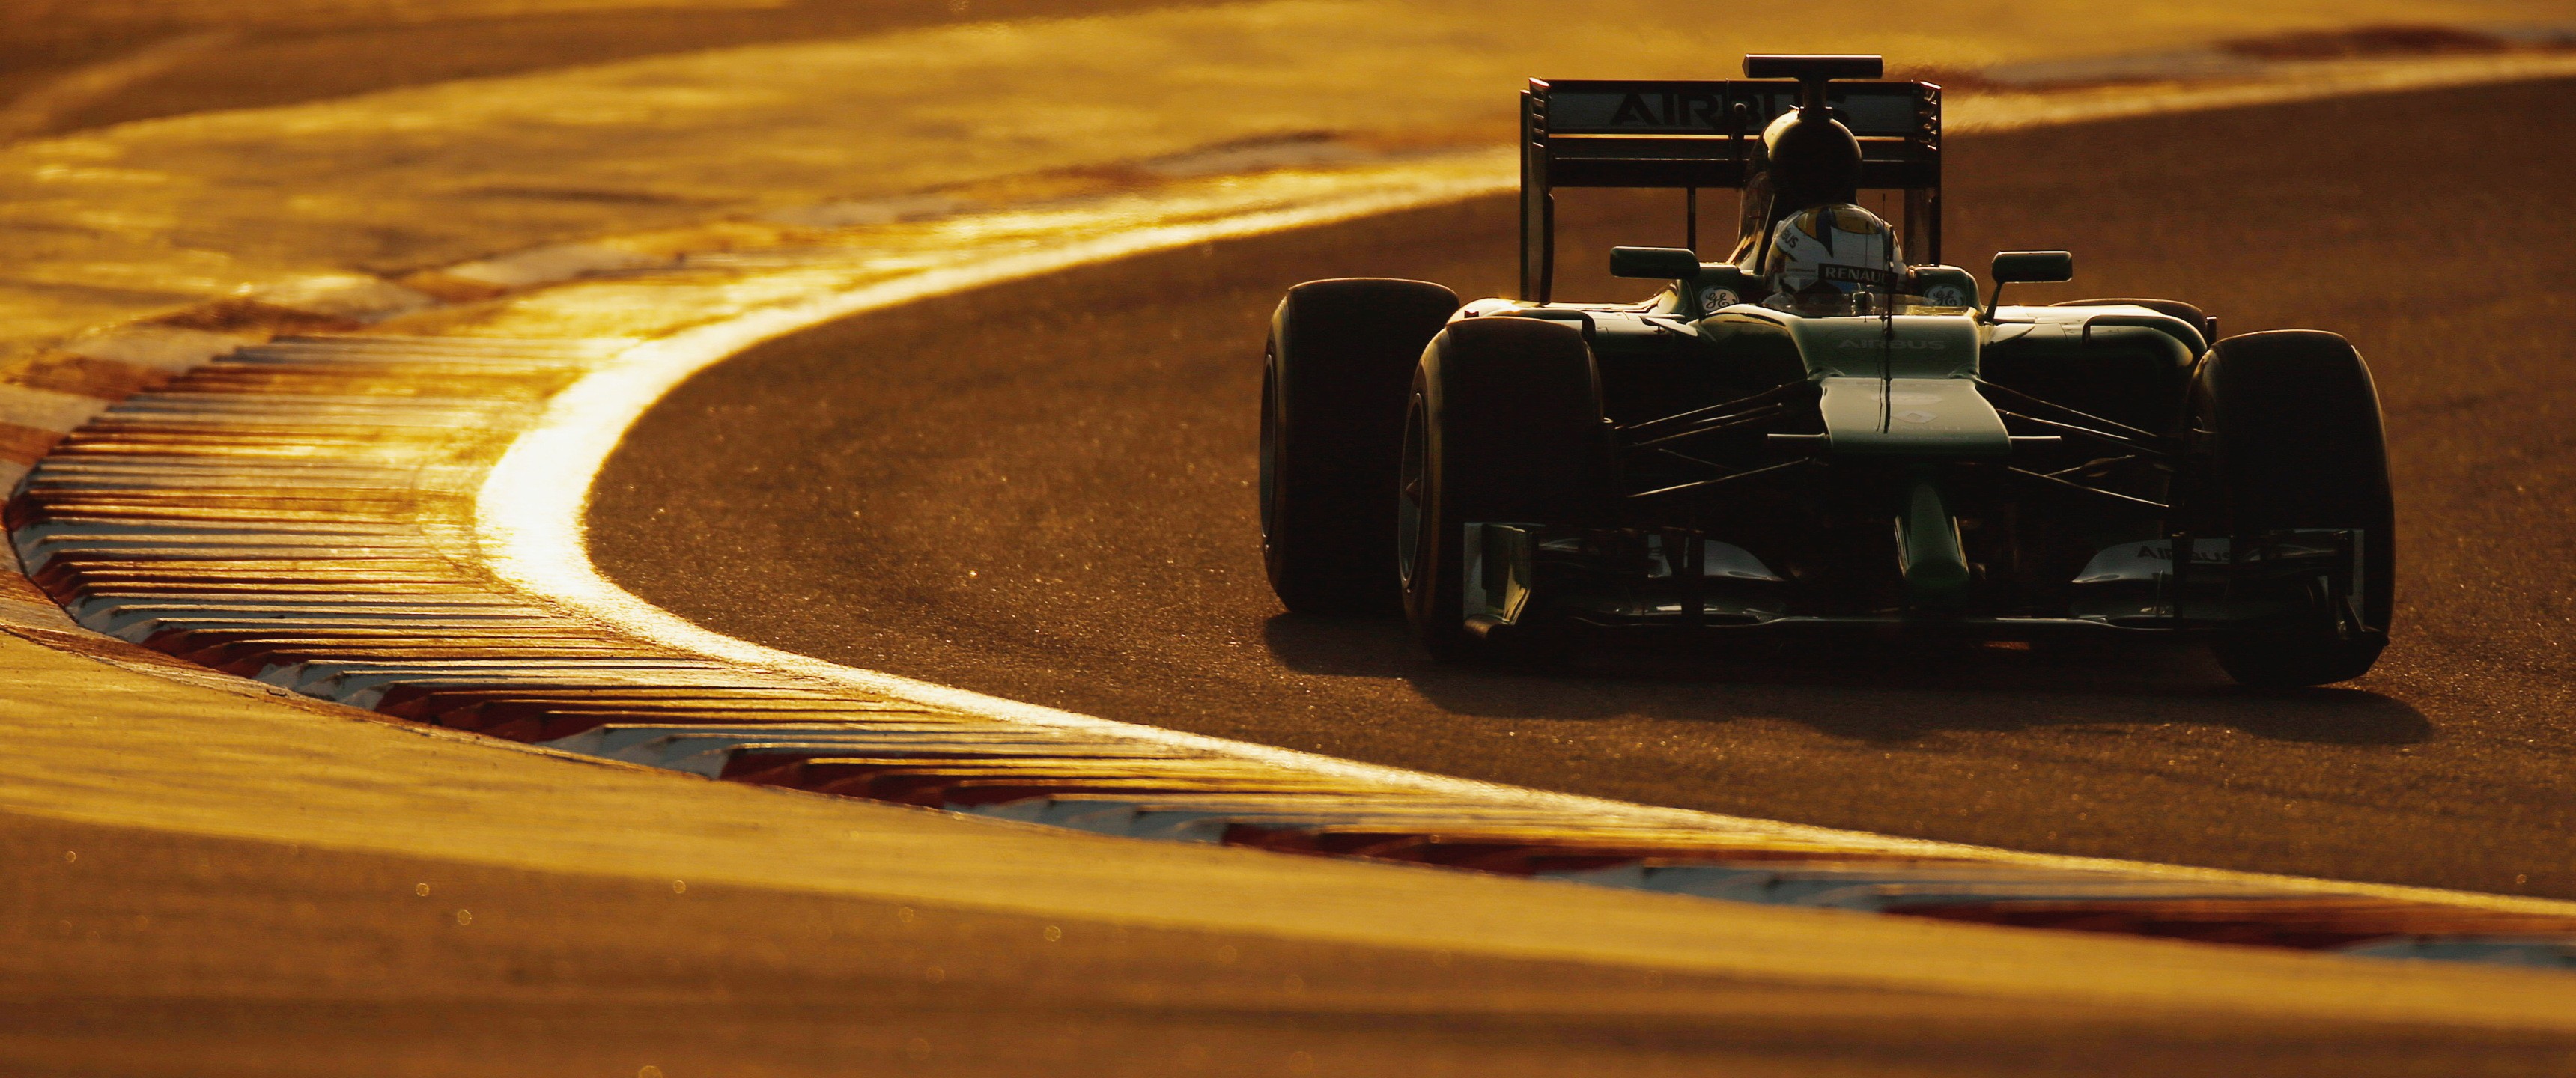 General 3440x1440 car Formula 1 race tracks sports car sunrise vehicle racing sport motorsport race cars